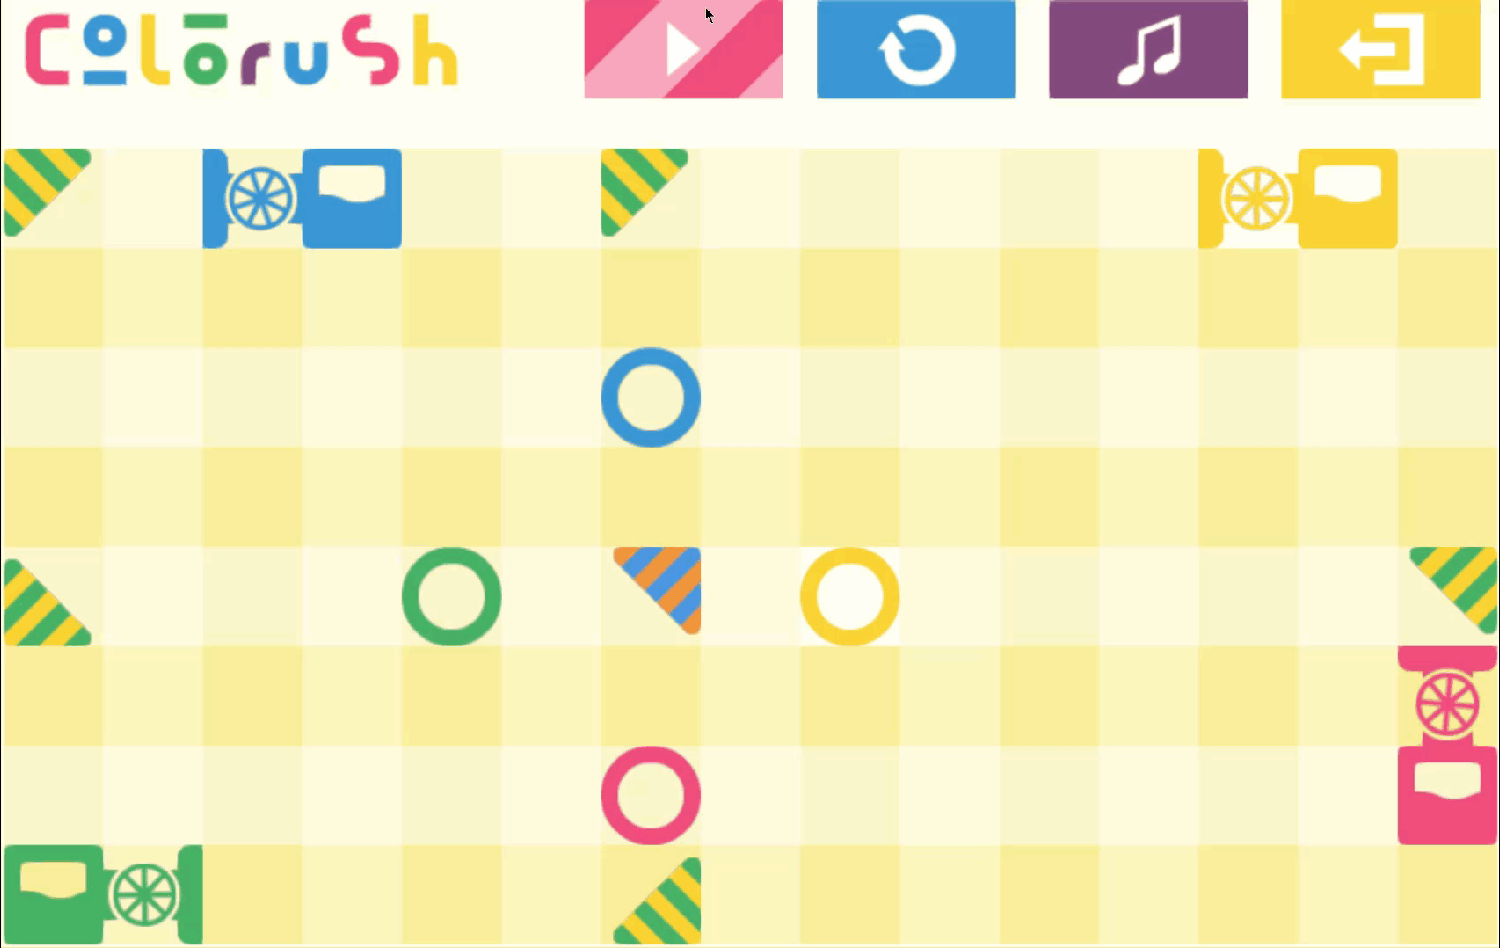 Colorush Game Level 10 Screenshot.